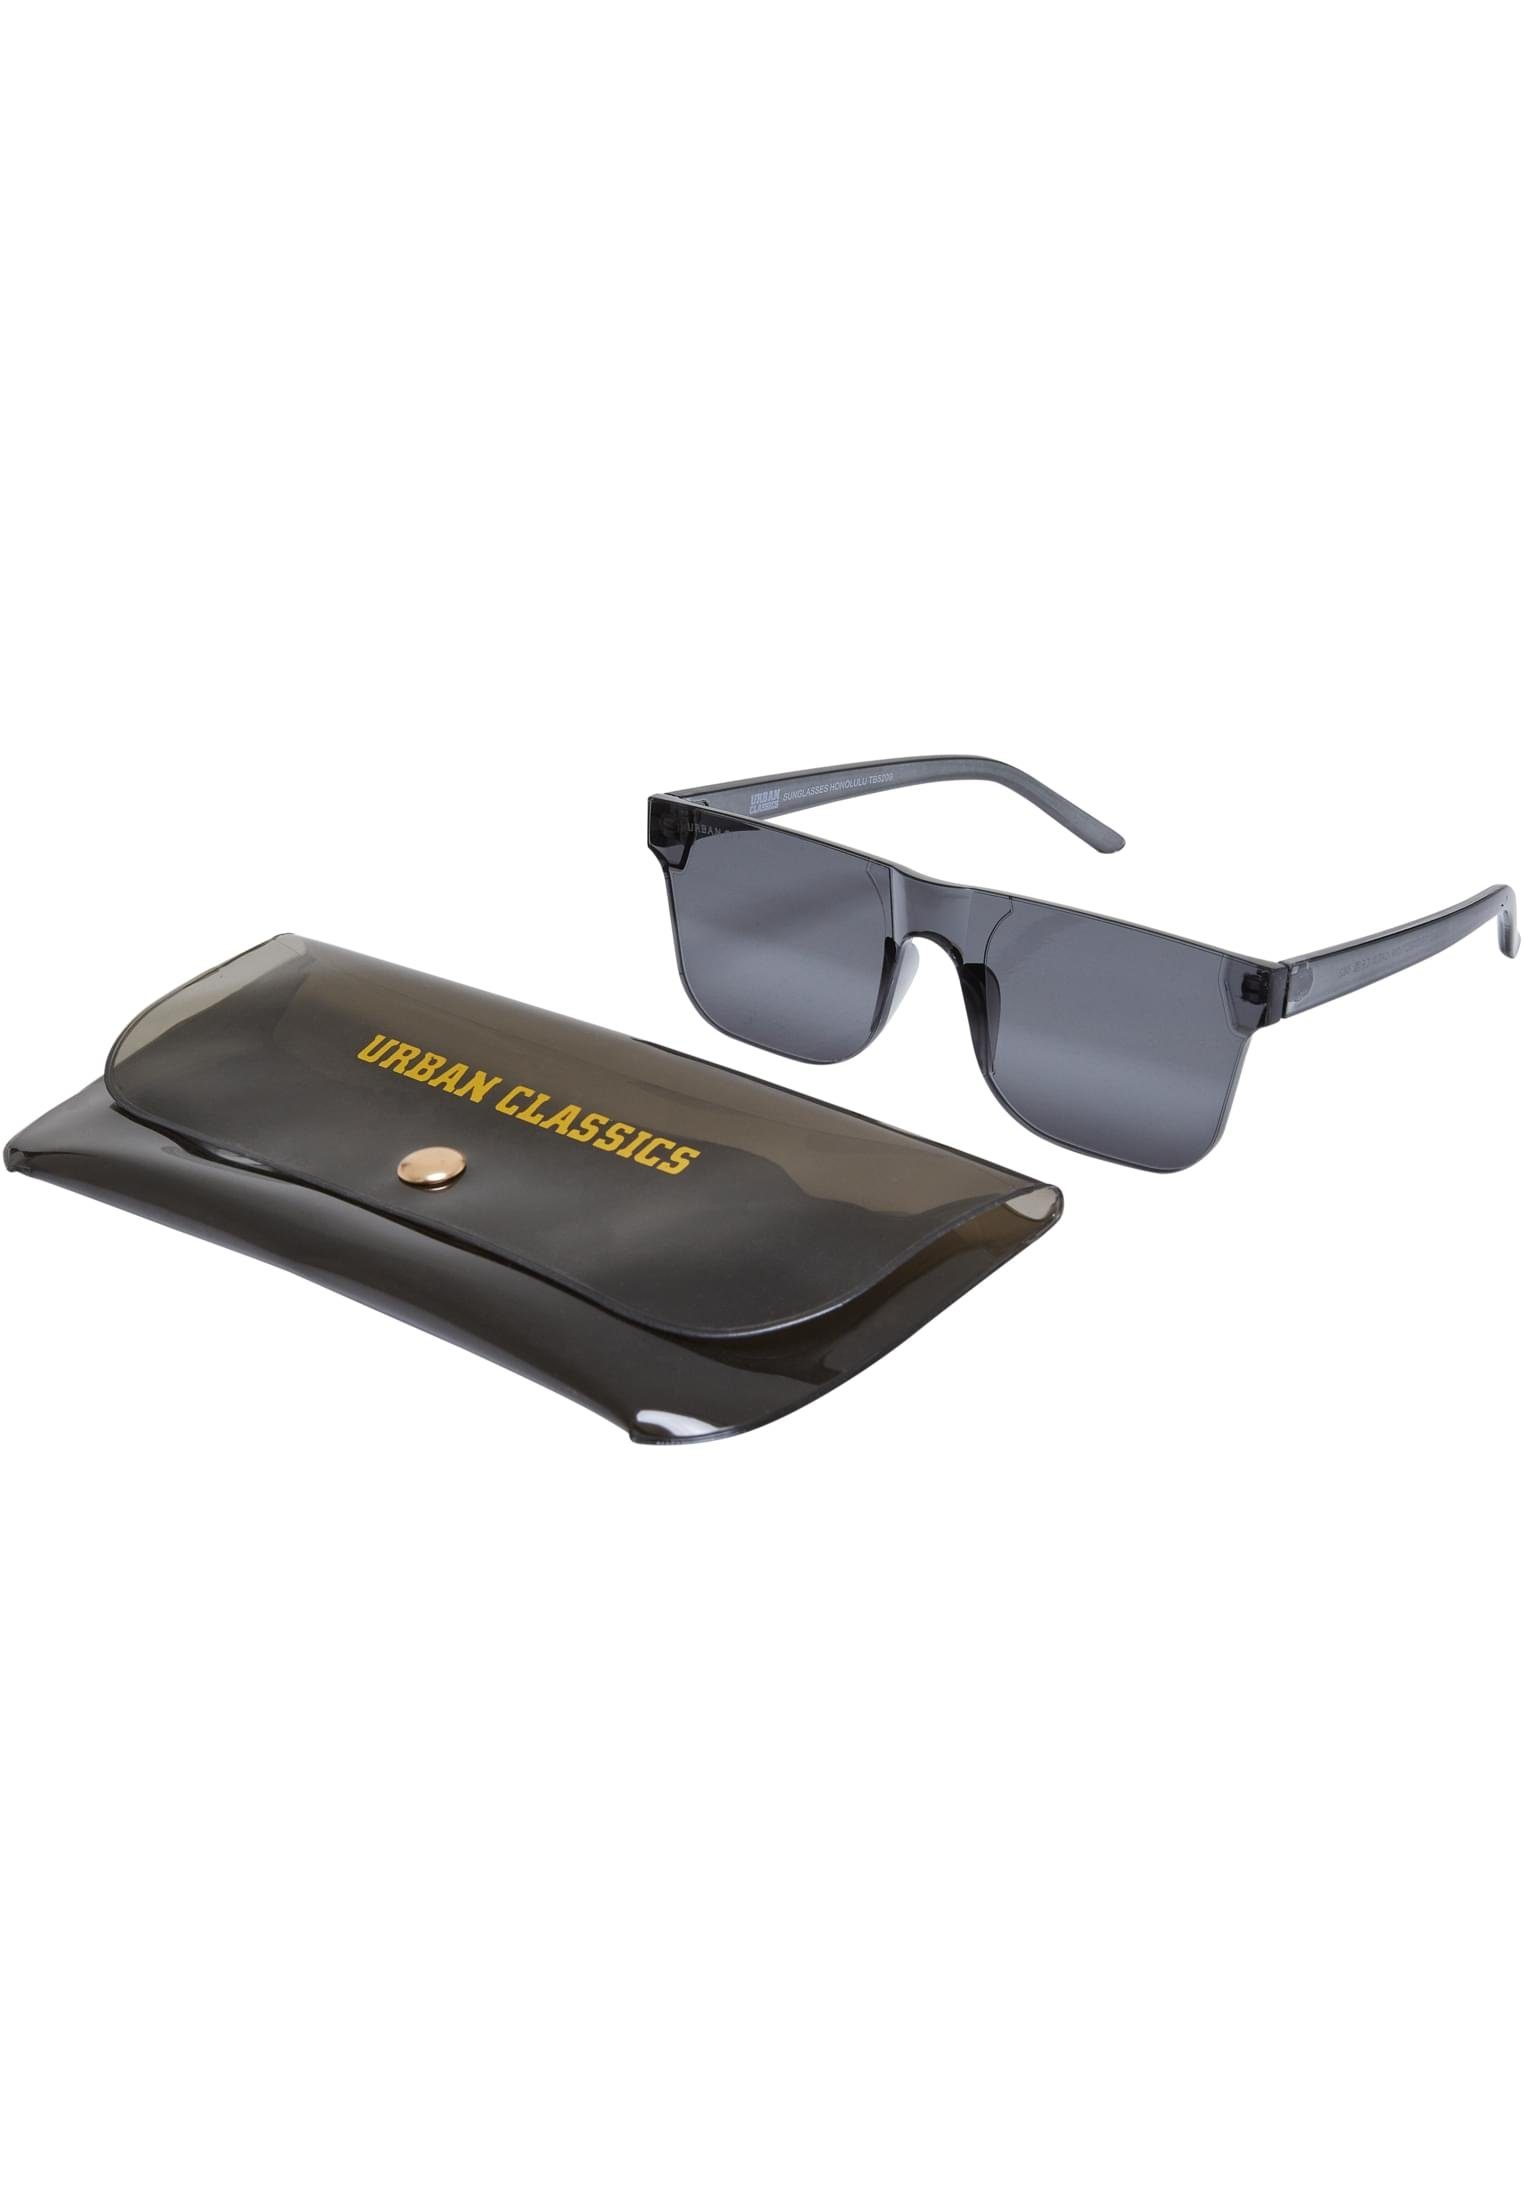 URBAN CLASSICS Sonnenbrille Unisex Sunglasses Honolulu With Case black